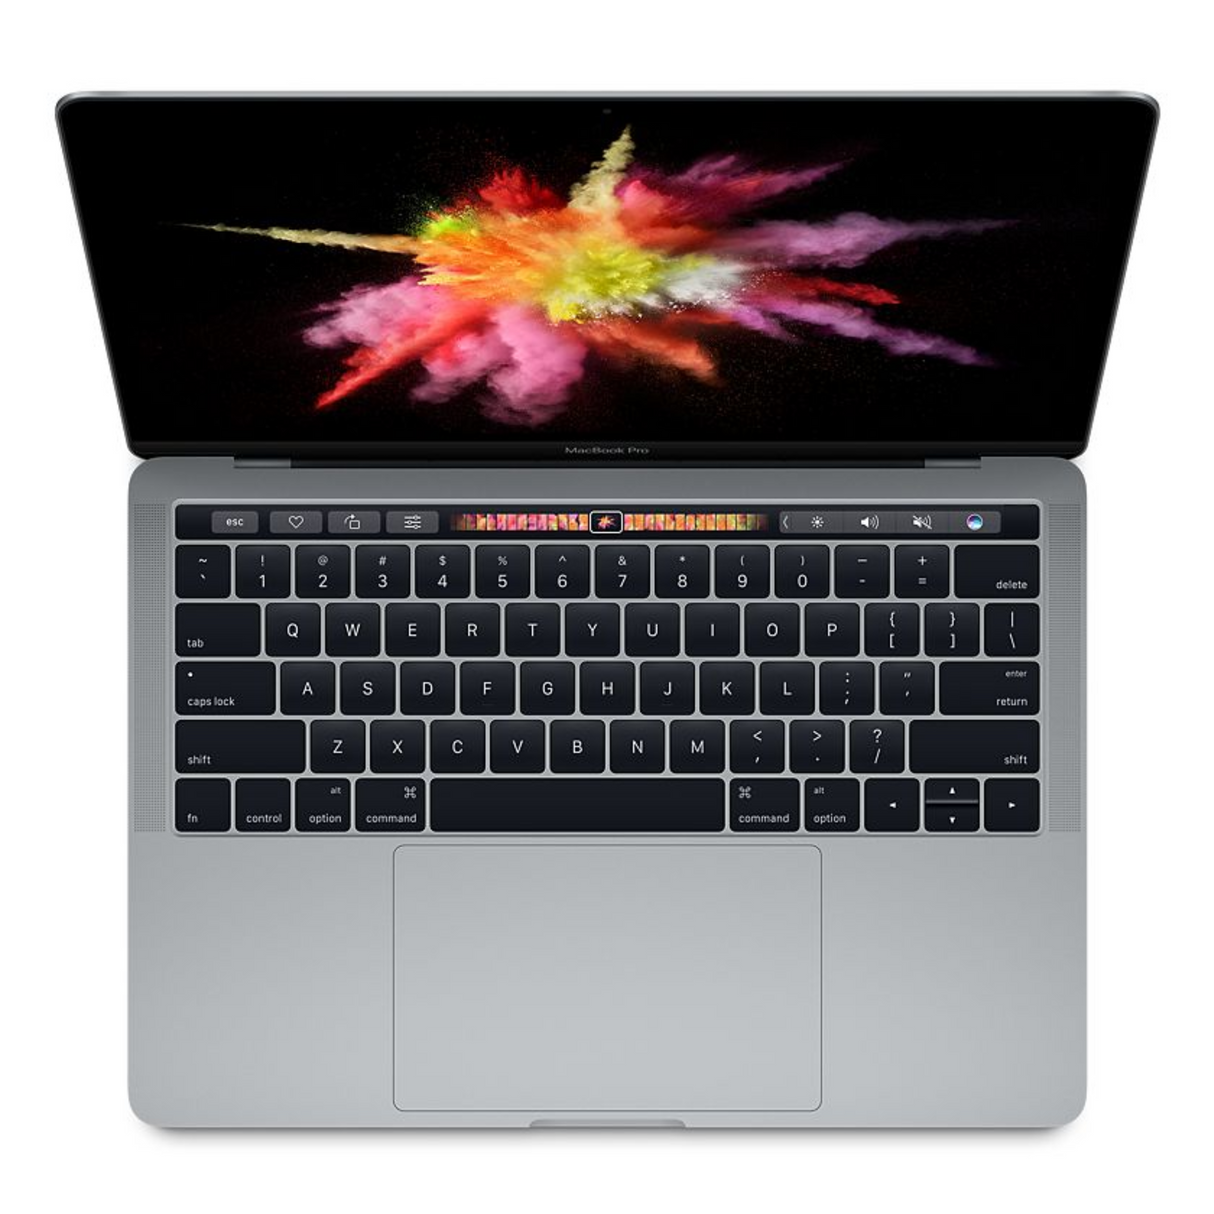 Apple MacBook Pro A1706 Intel Core i5 13 Inch  2017 Modal With TouchBar Laptop (Refurbished)